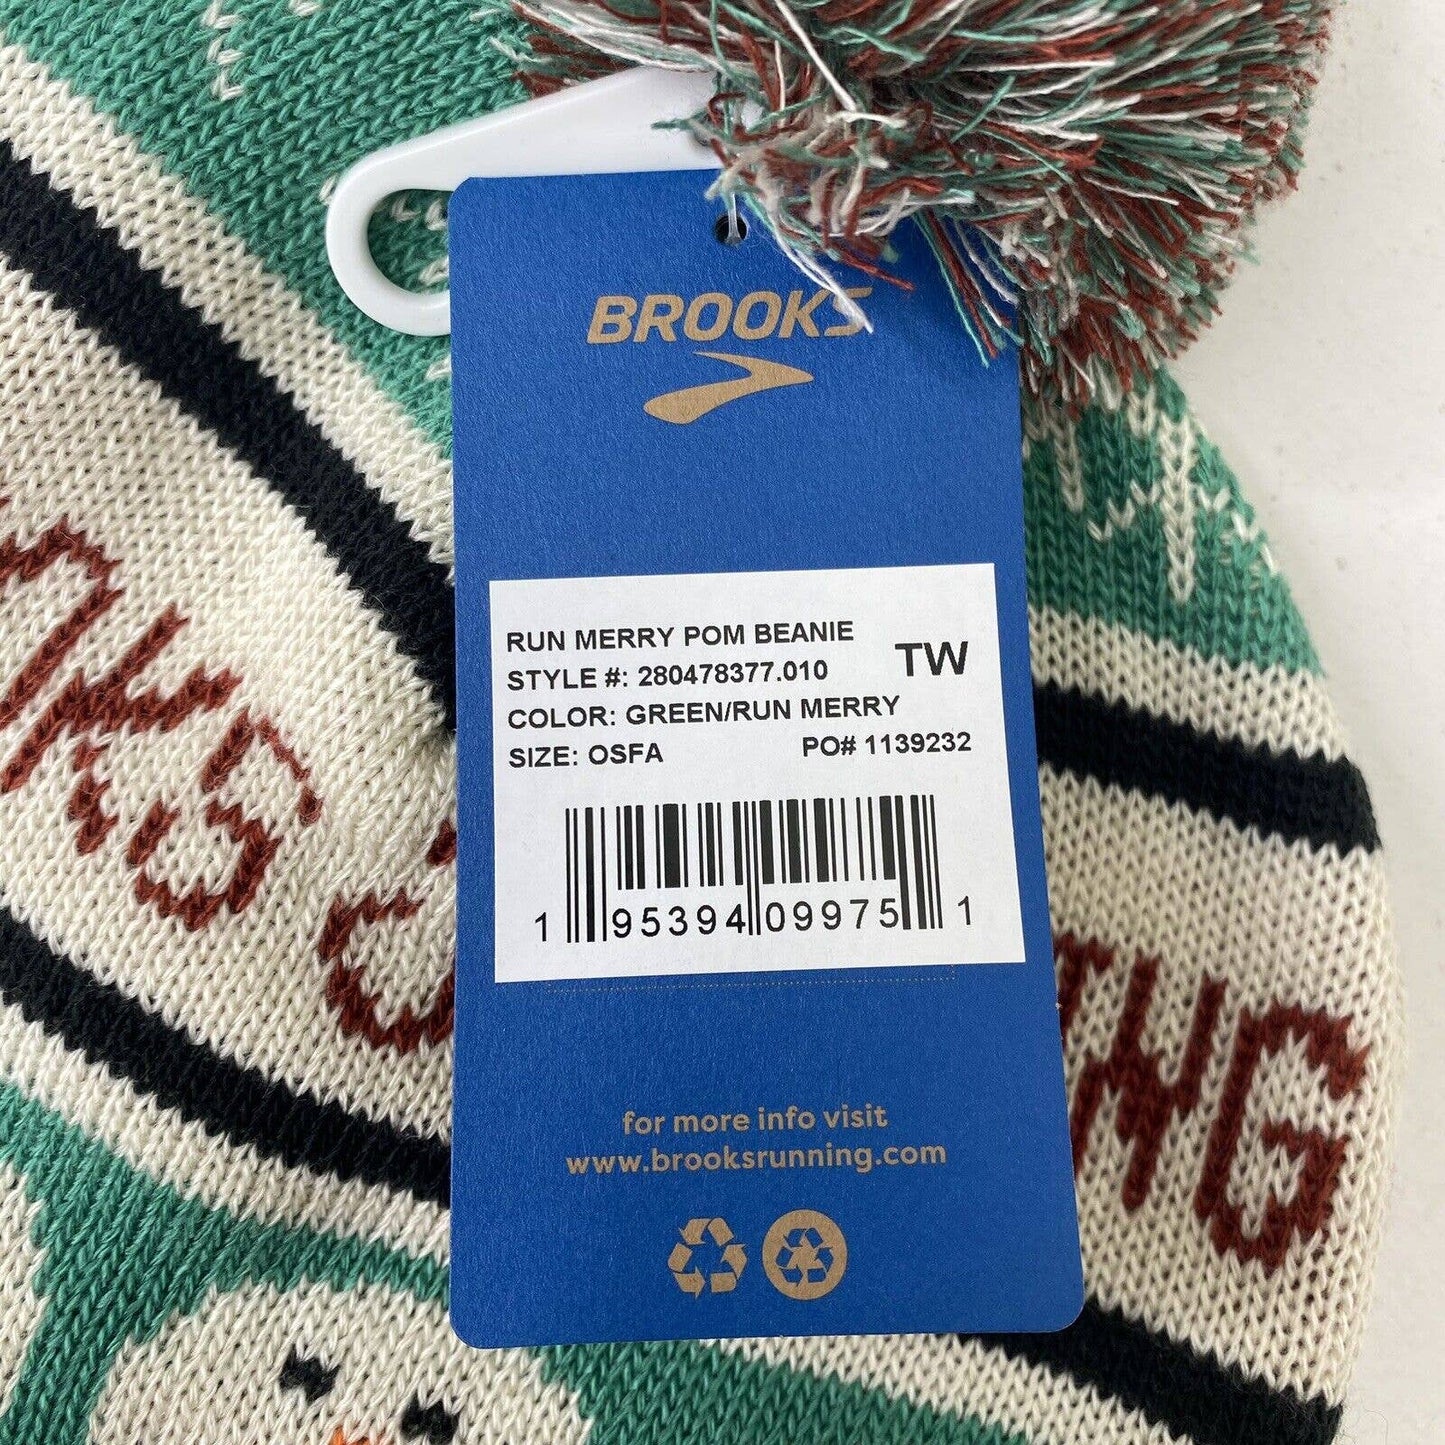 NWT Brooks Run Merry Pom Beanie Unisex Running Apparel Style 280478377 Knit Cap